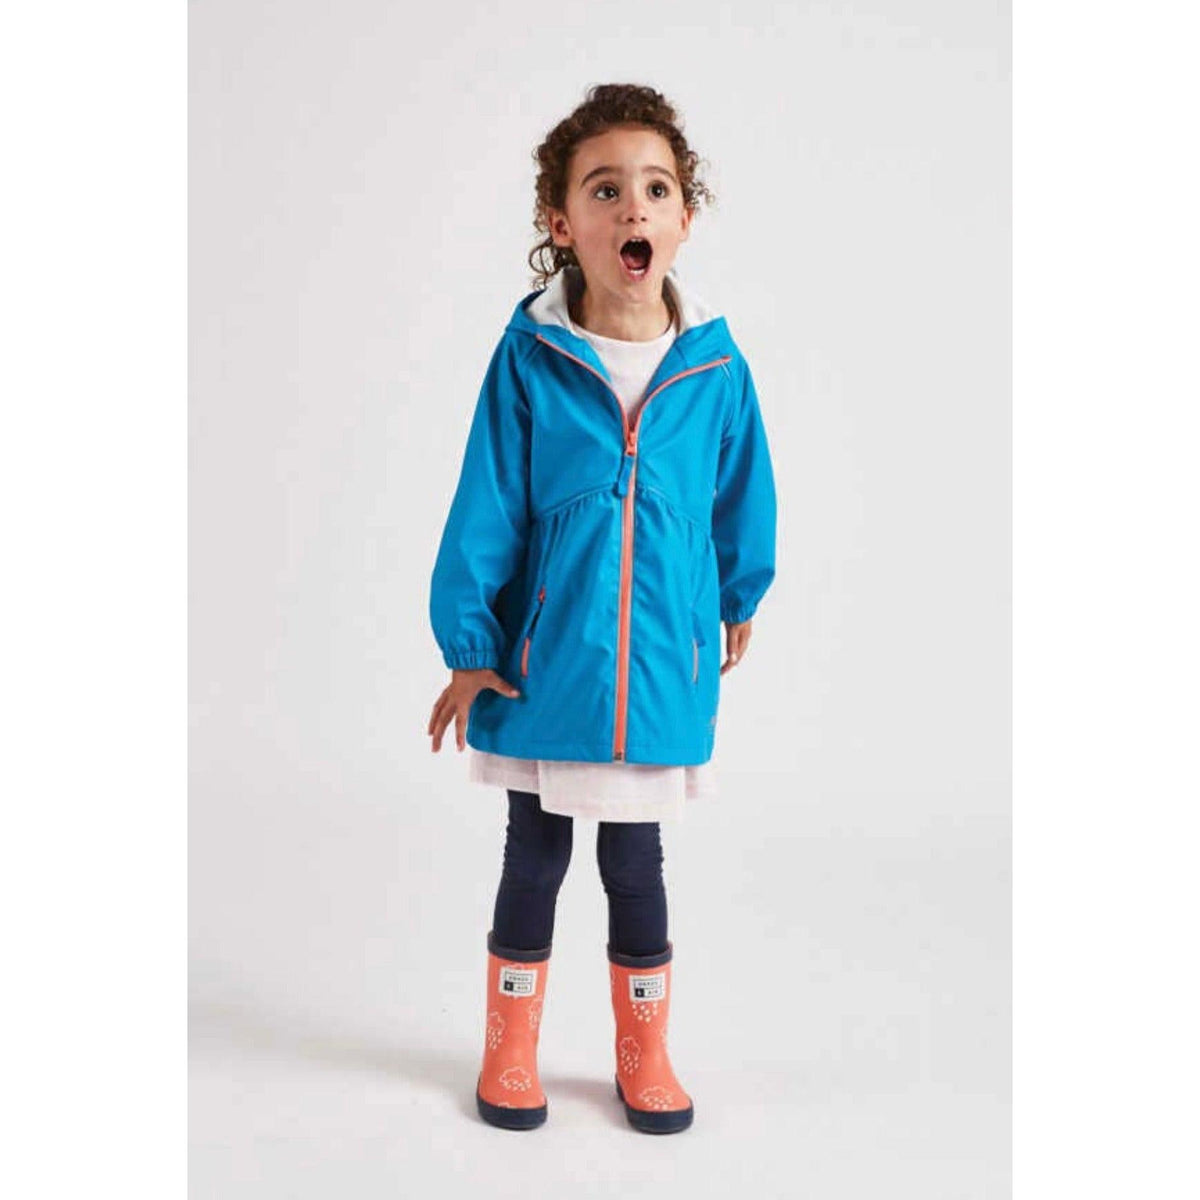 Grass & Air | Kids Turquoise Rain Jacket | Girls Waterproof Jacket - becauseofadi